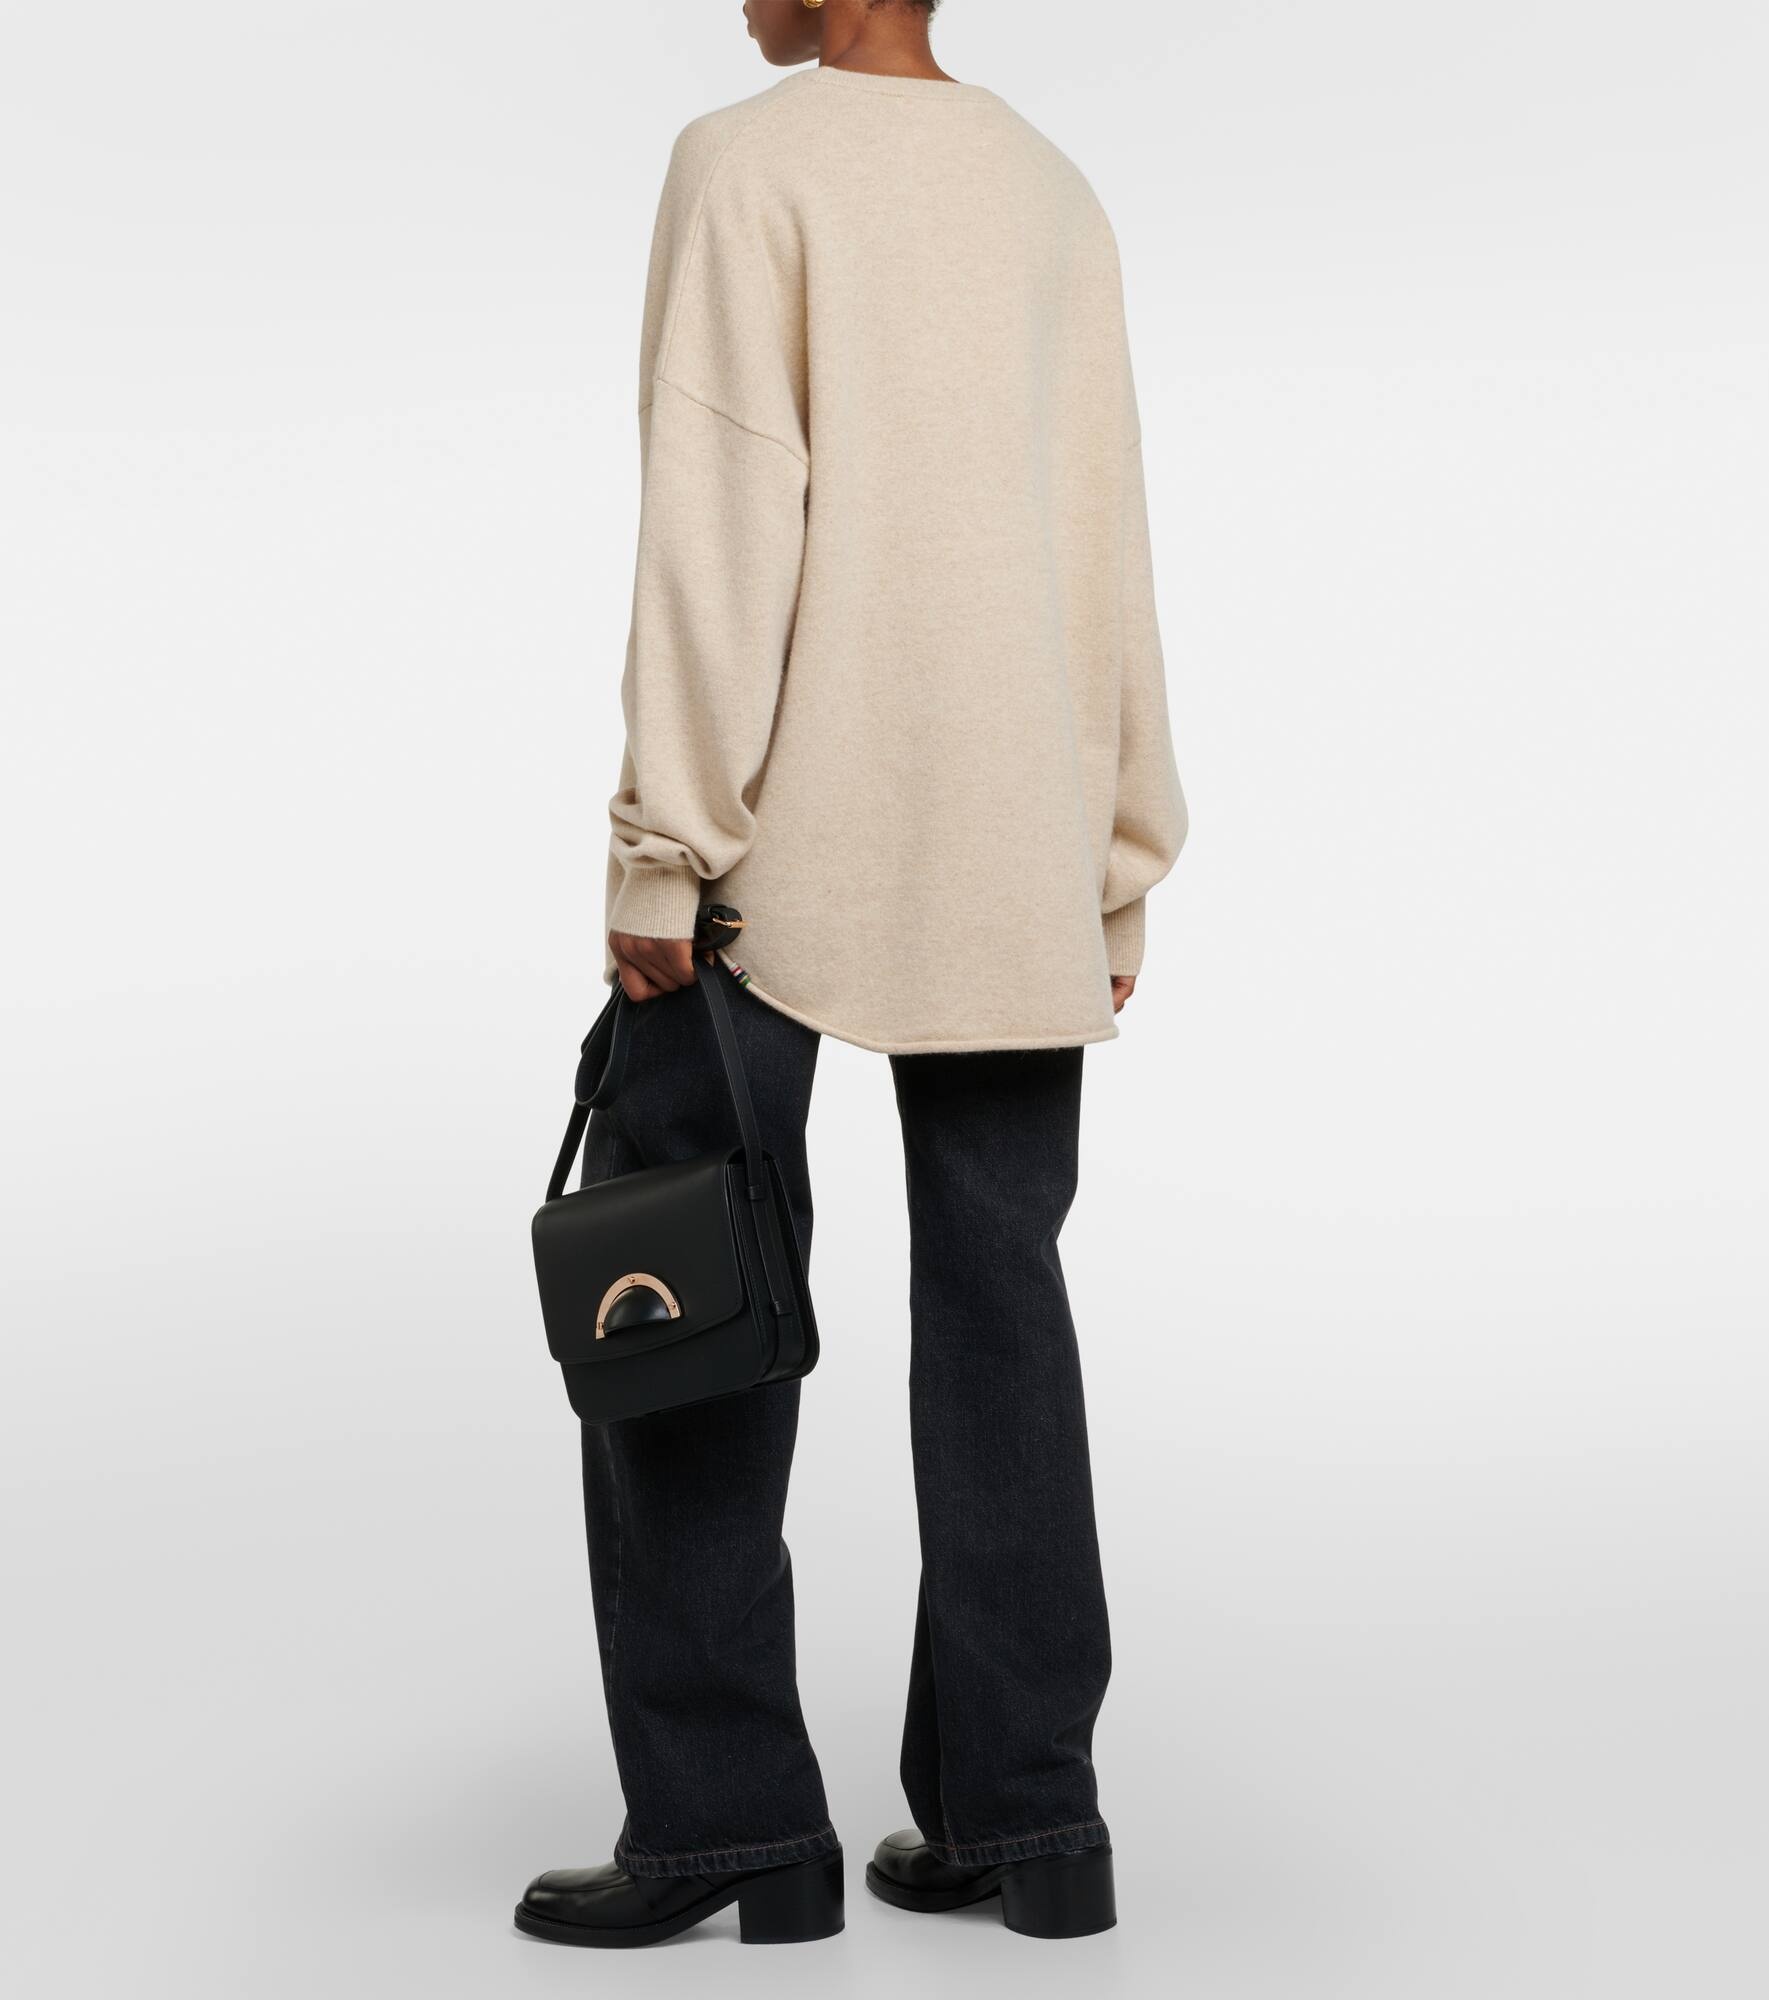 N°53 Crew Hop cashmere-blend sweater - 3